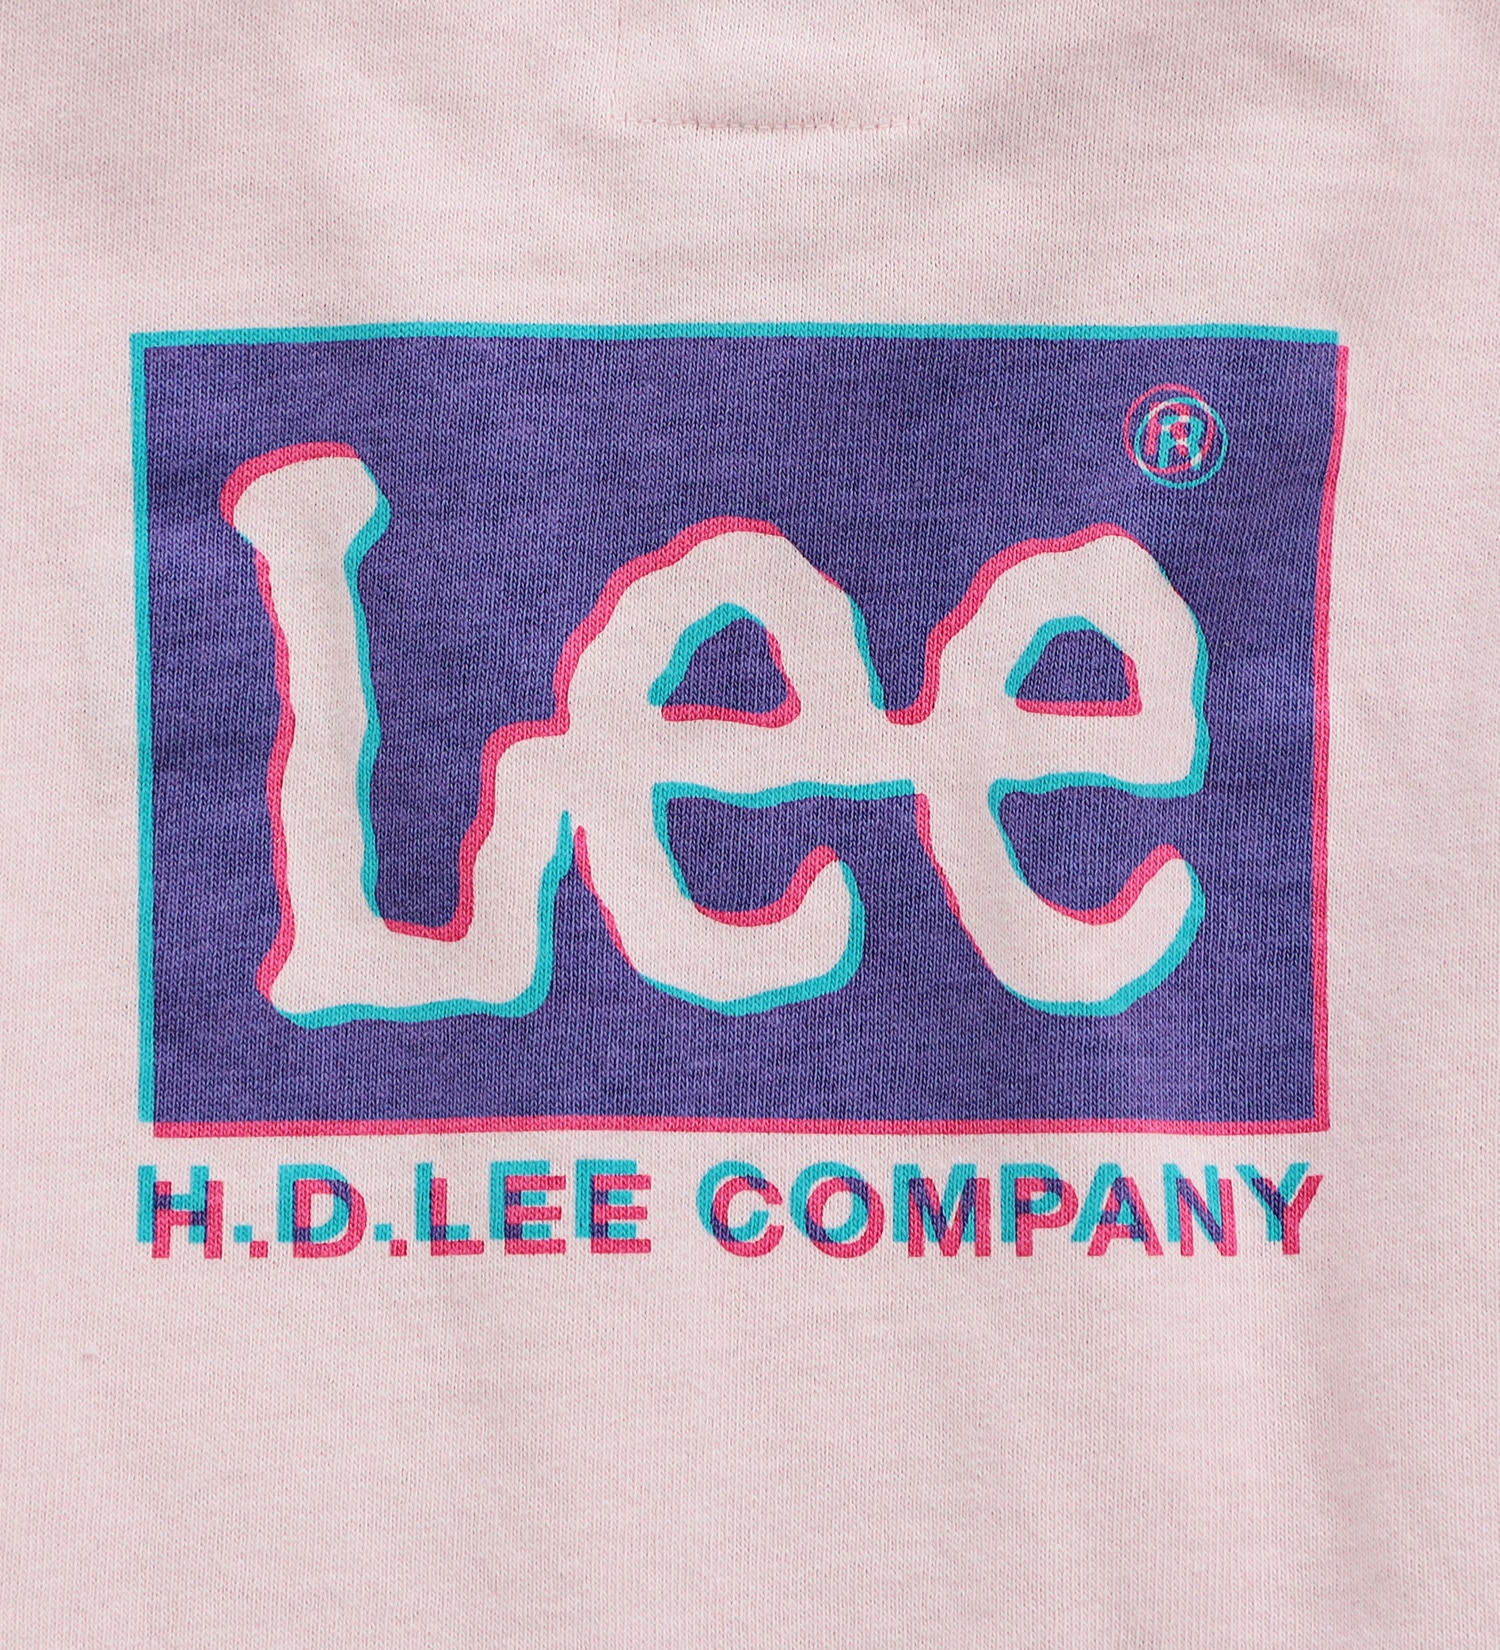 Lee(リー)の【80-100cm】ベビー バックプリント Leeロゴ ショートスリーブTee|トップス/Tシャツ/カットソー/キッズ|ピンク